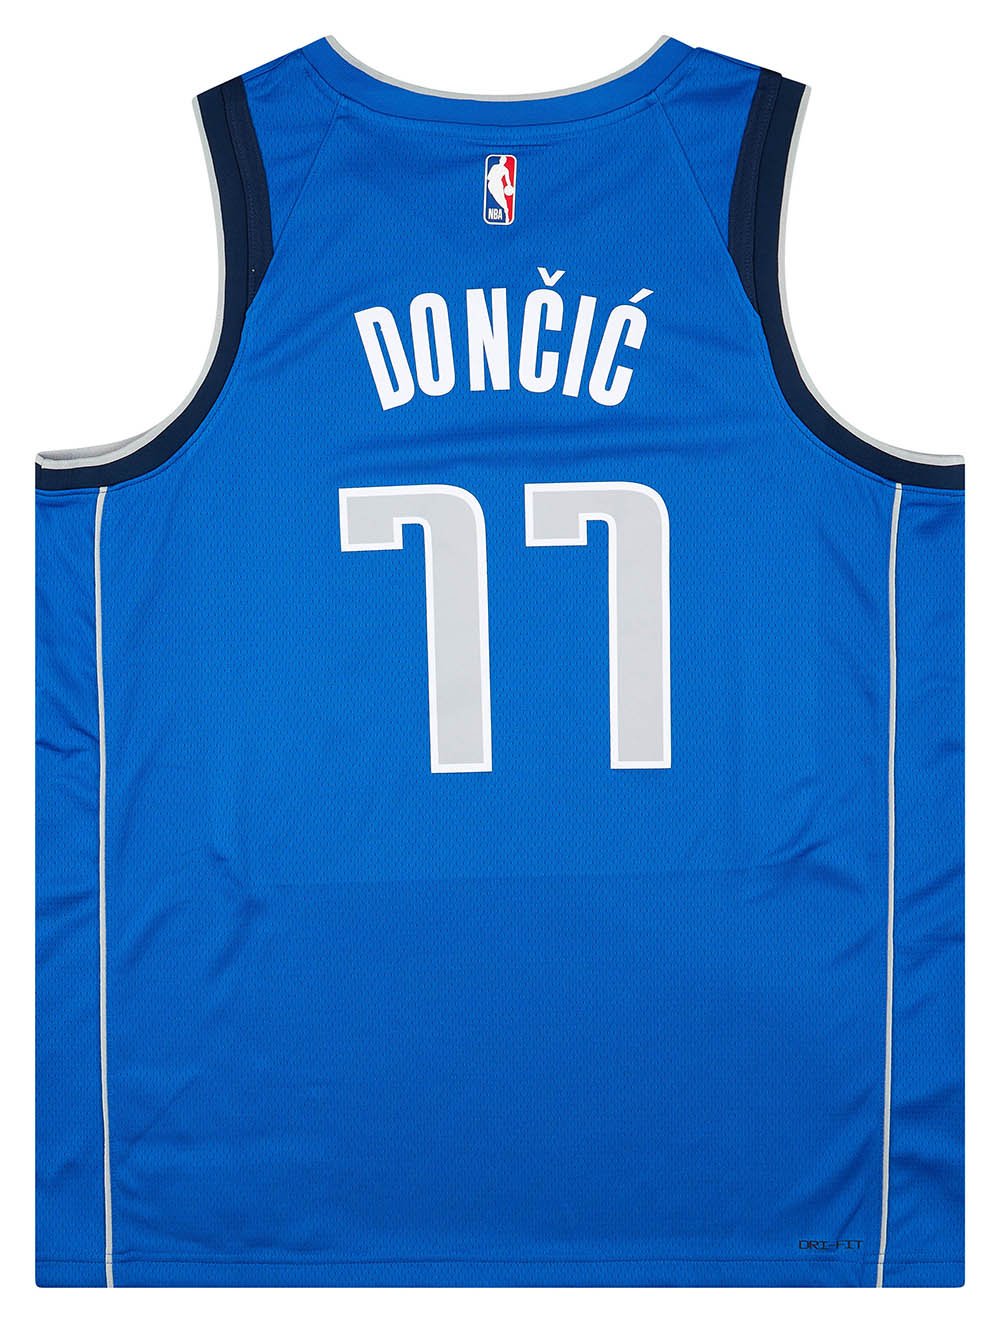 Nike Youth Dallas Mavericks Luka Doncic #77 Royal Swingman Jersey, Boys', Medium, Blue